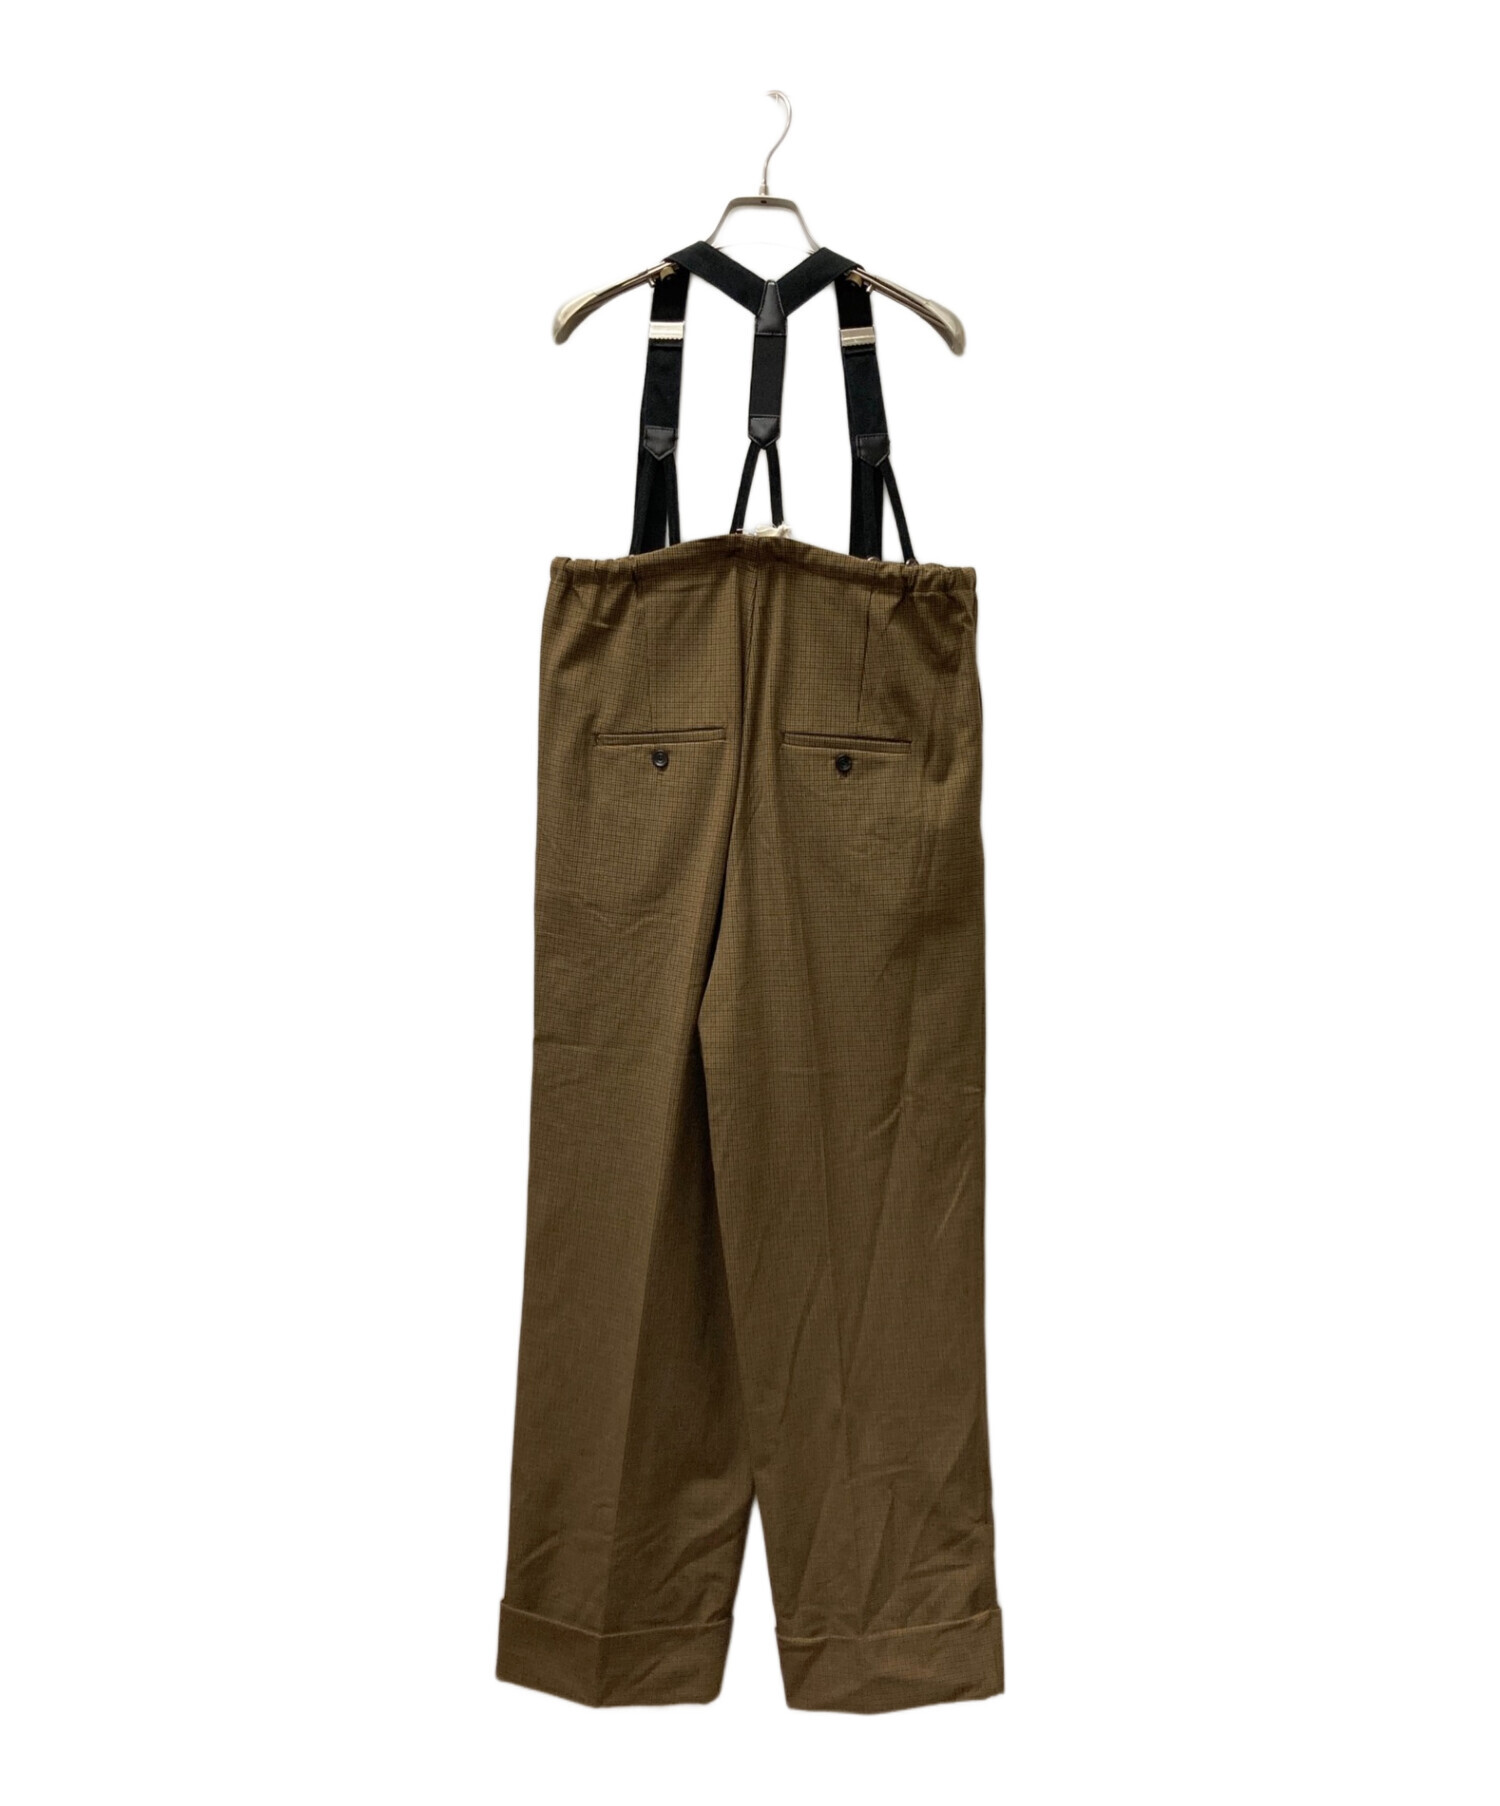 TODAYFUL (トゥデイフル) Suspenders Highwaist Pants ブラウン サイズ:S